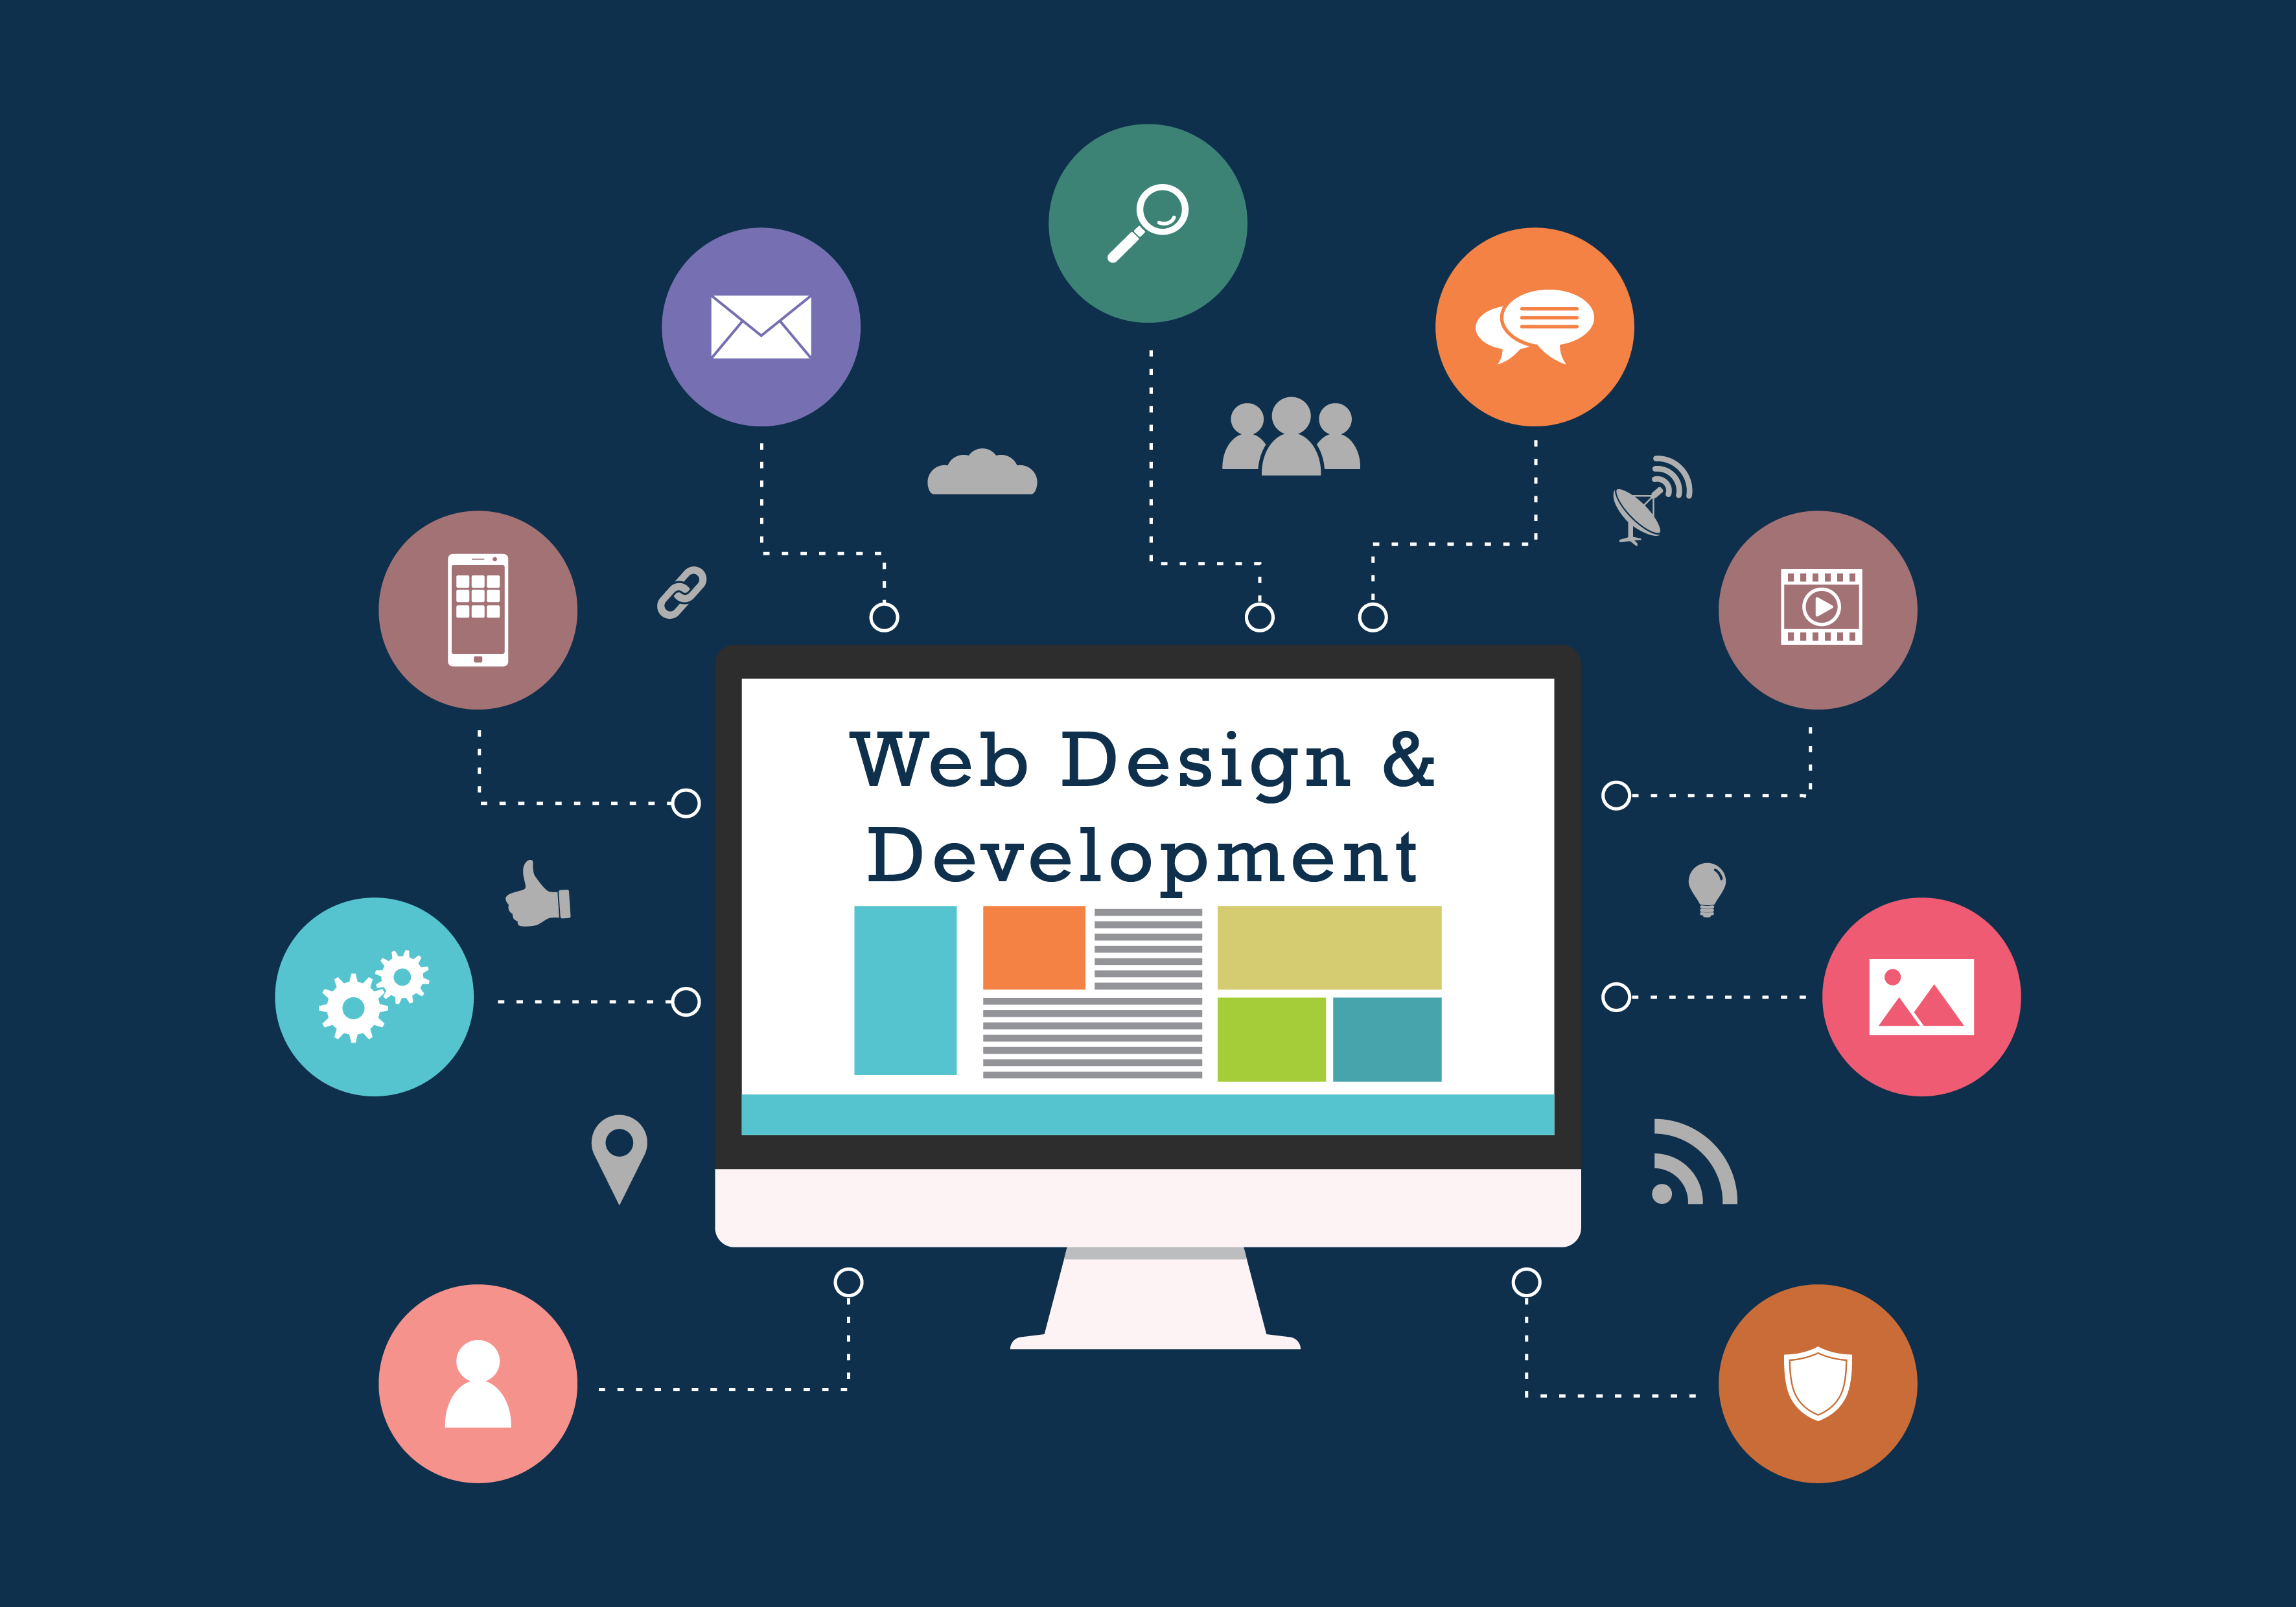 Web design hamble